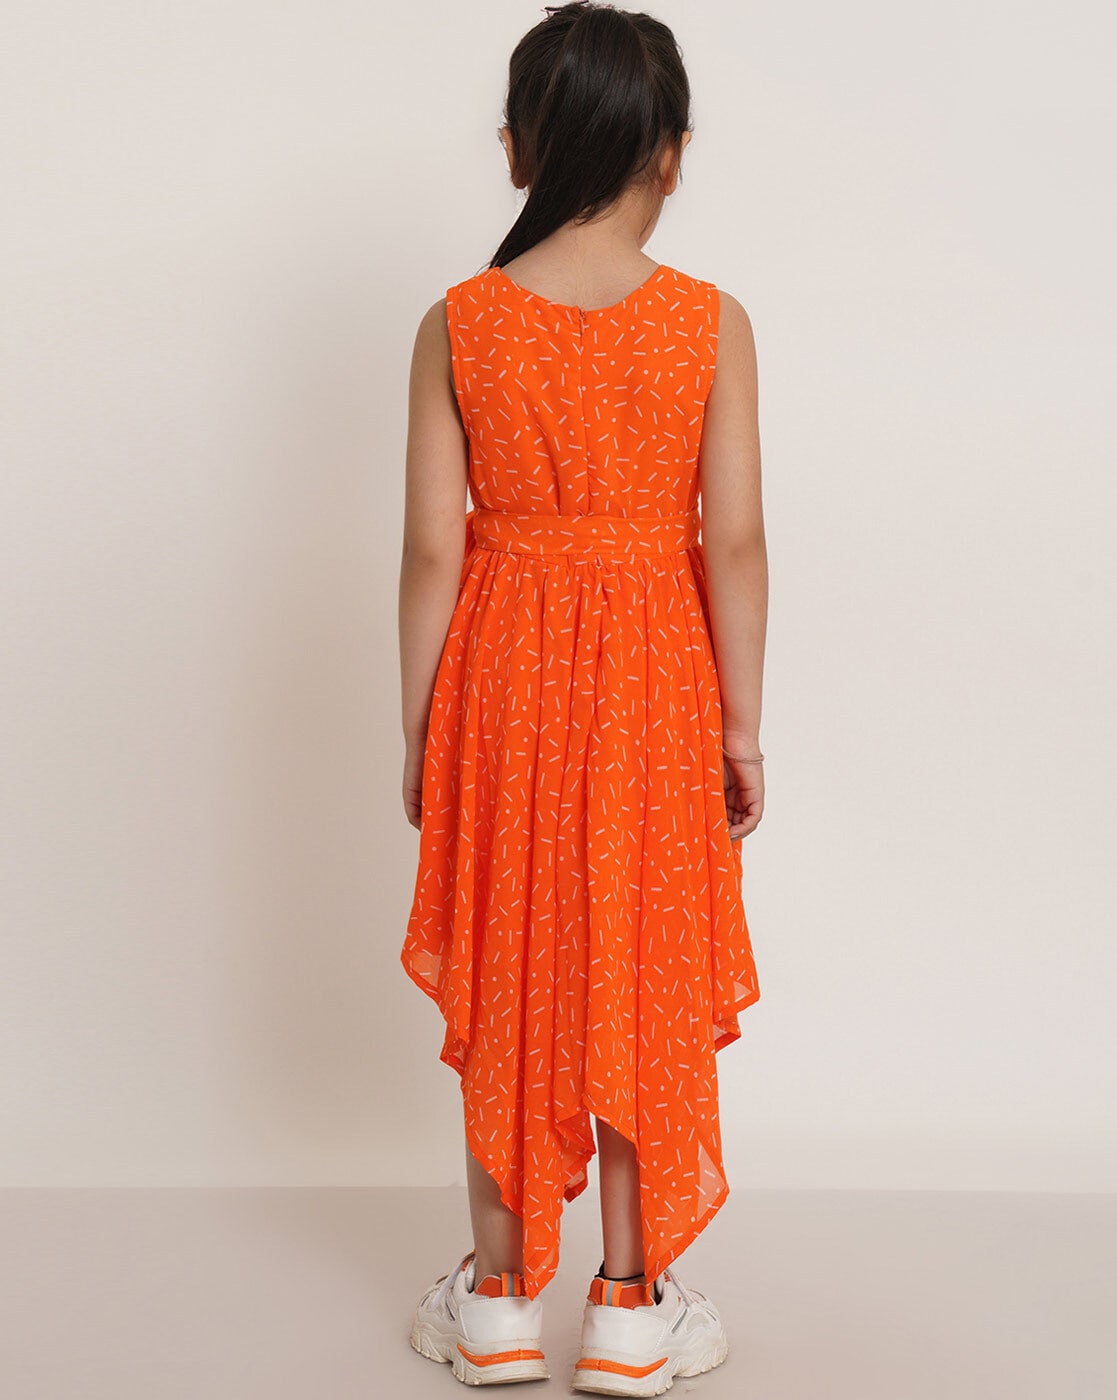 Buy diniys Orange,Girls midi Length Dress (5-6 Years) at Amazon.in